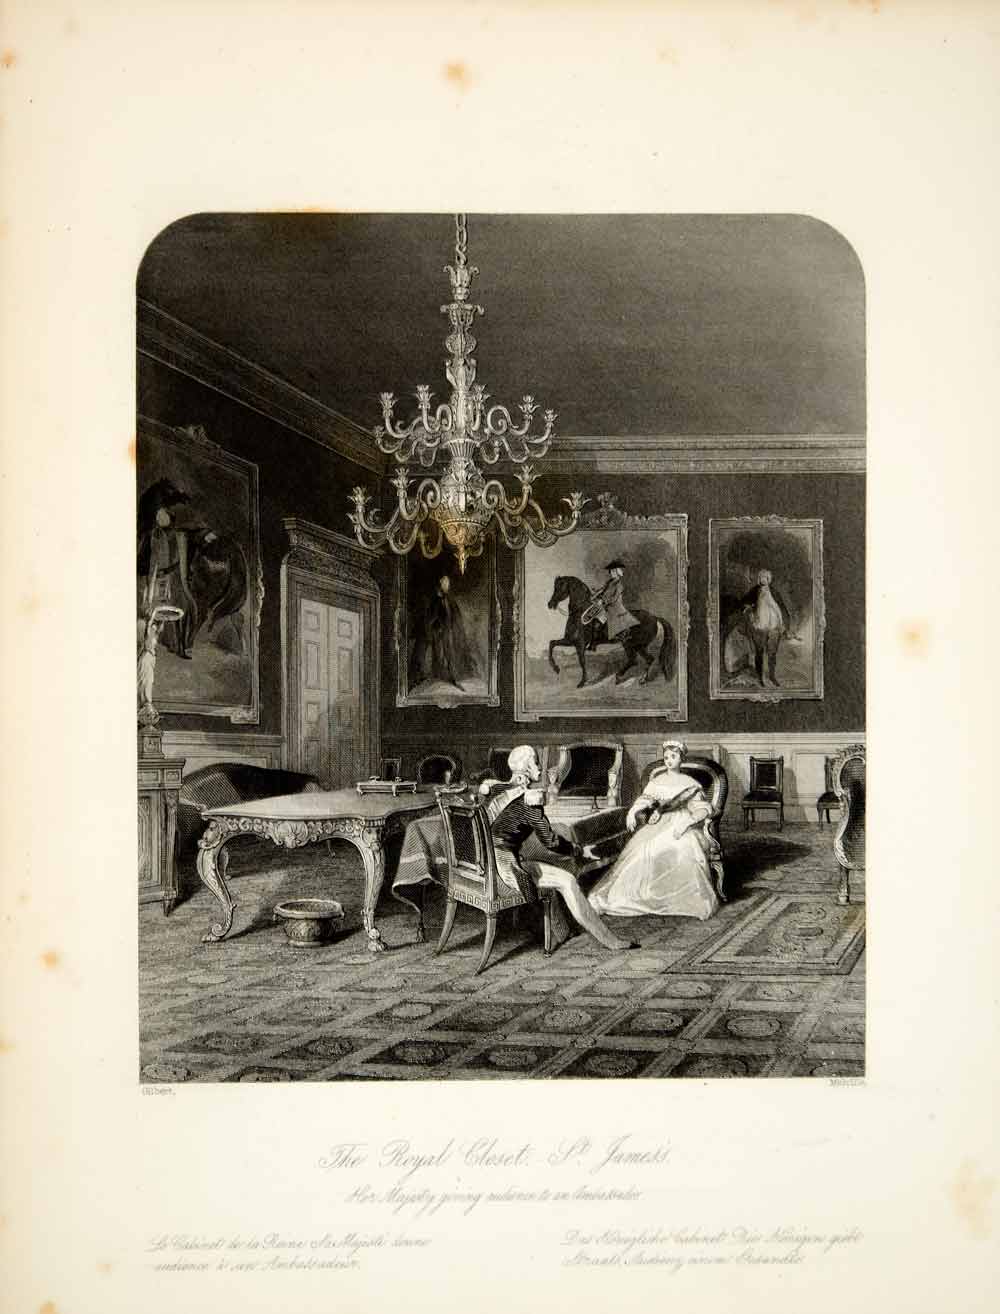 1845 Steel Engraving J Gilbert Royal Closet St James Palace Queen Victoria XGHD9